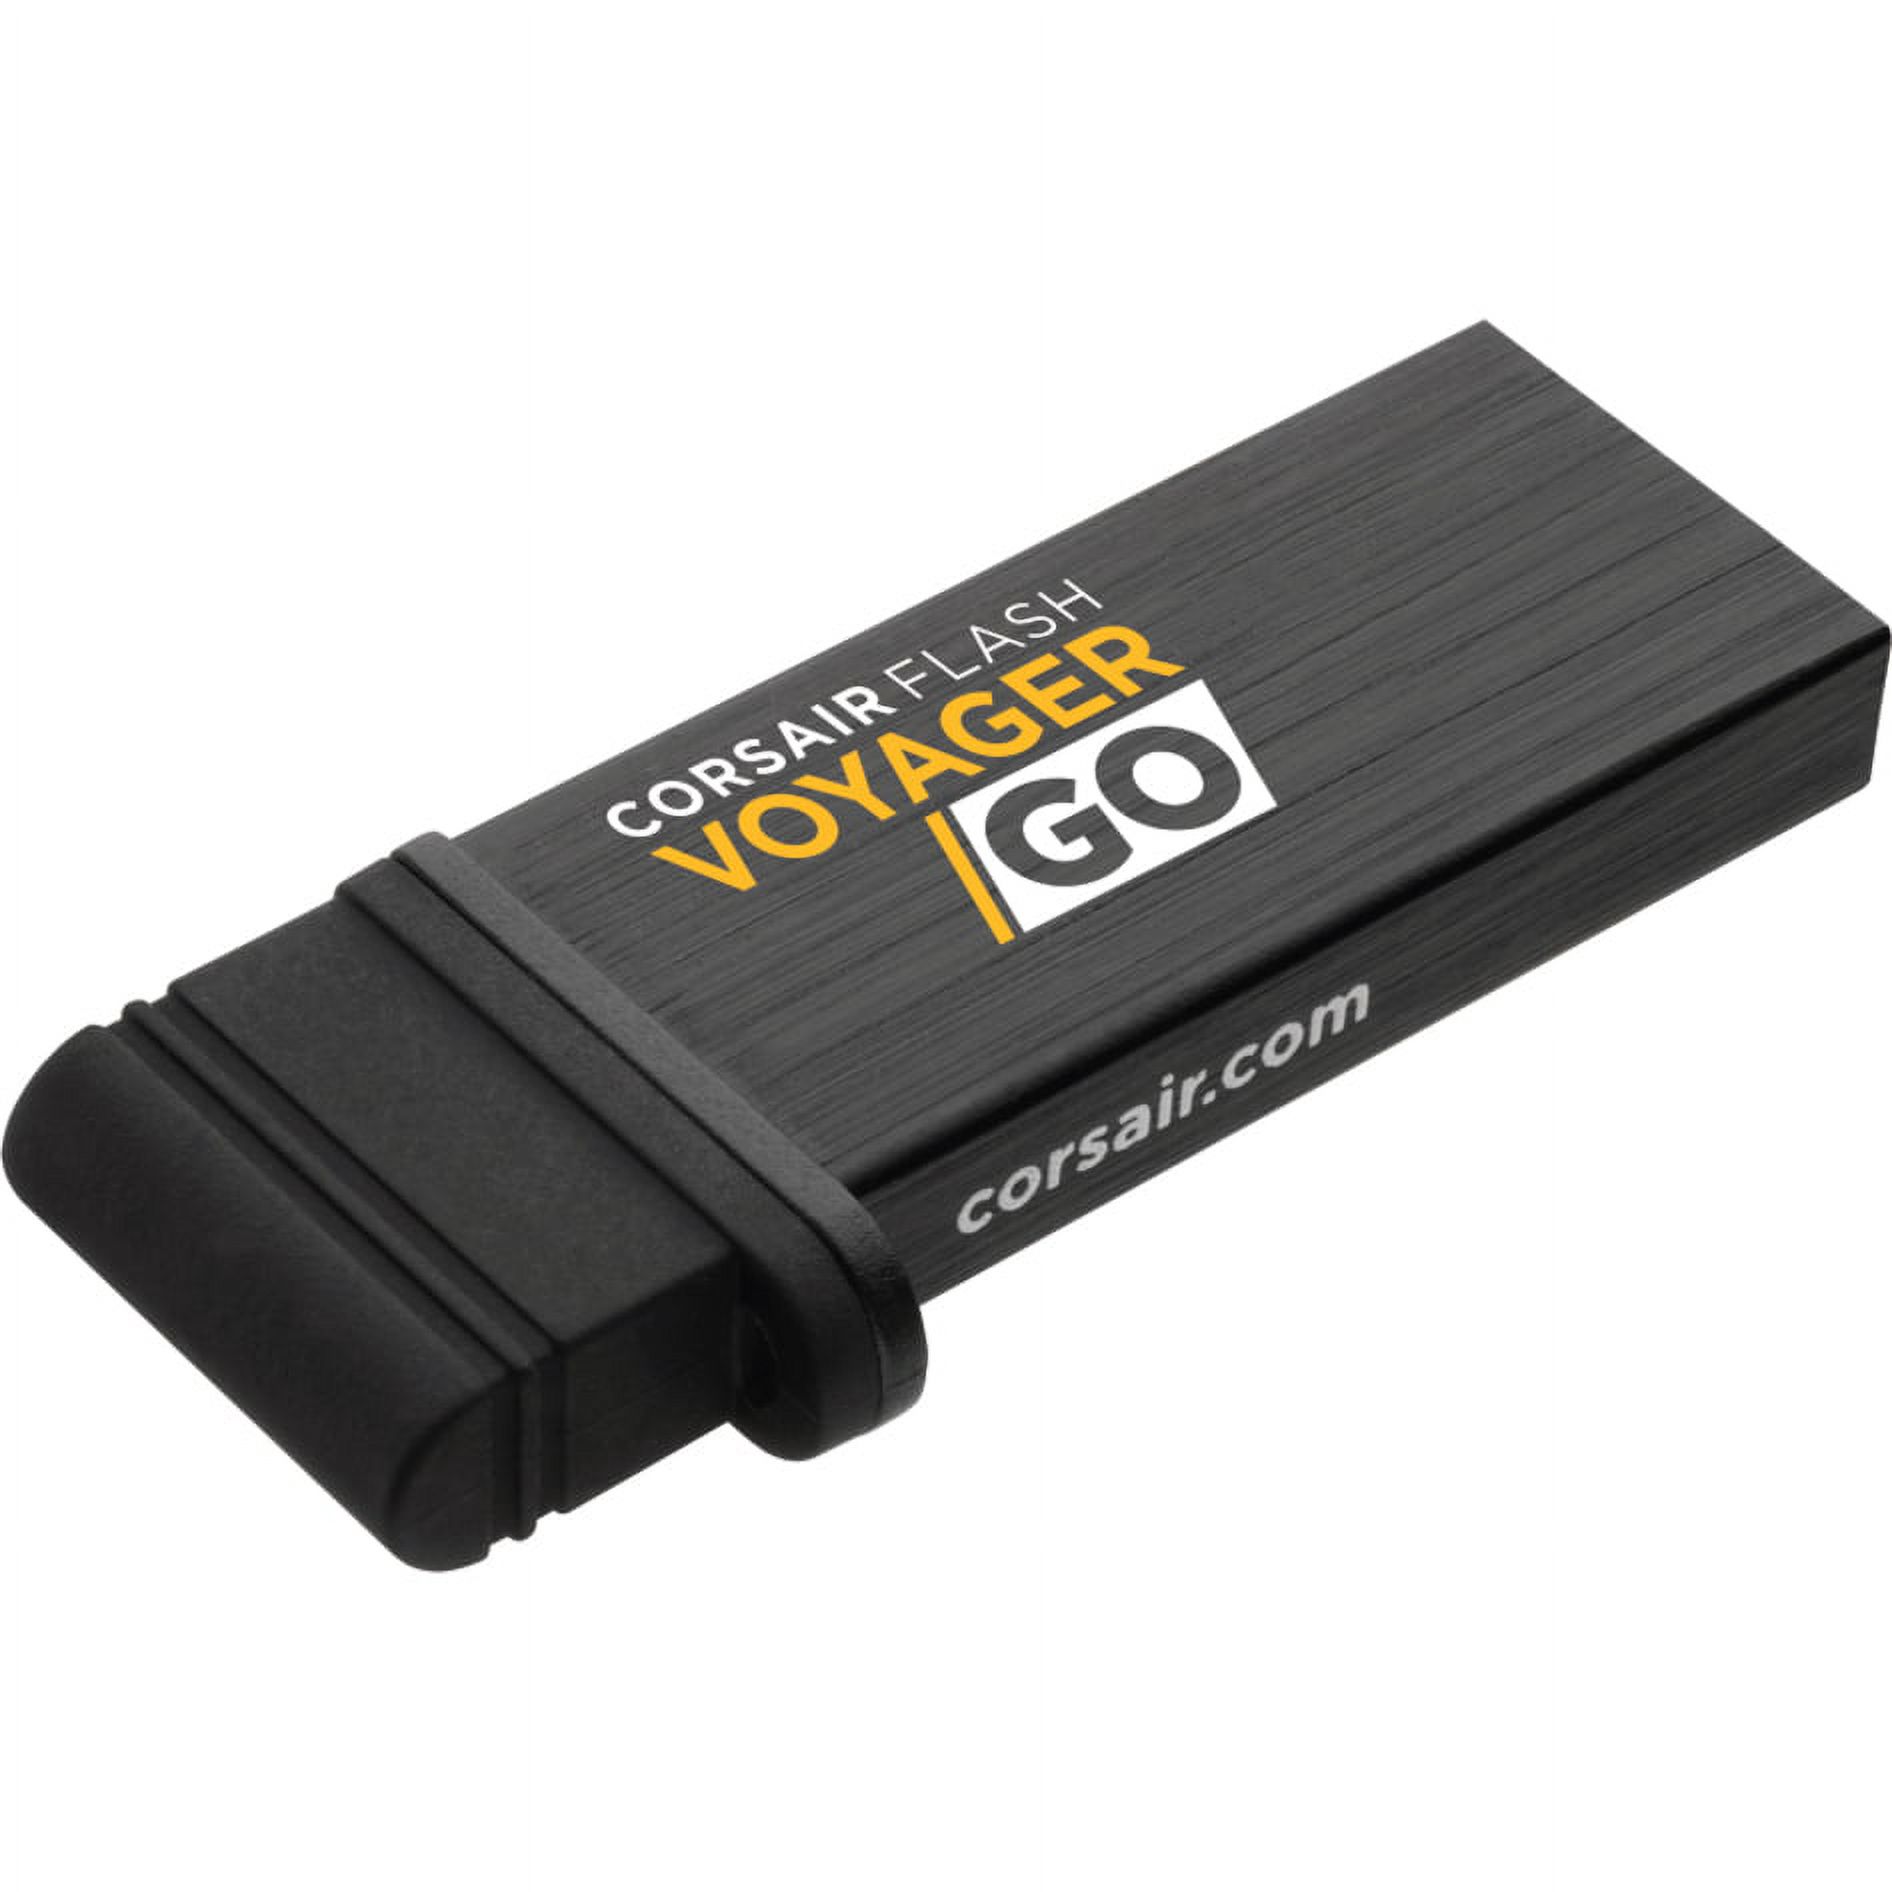 16GB FLASH VOYAGER GO USB 3.0 - image 2 of 3